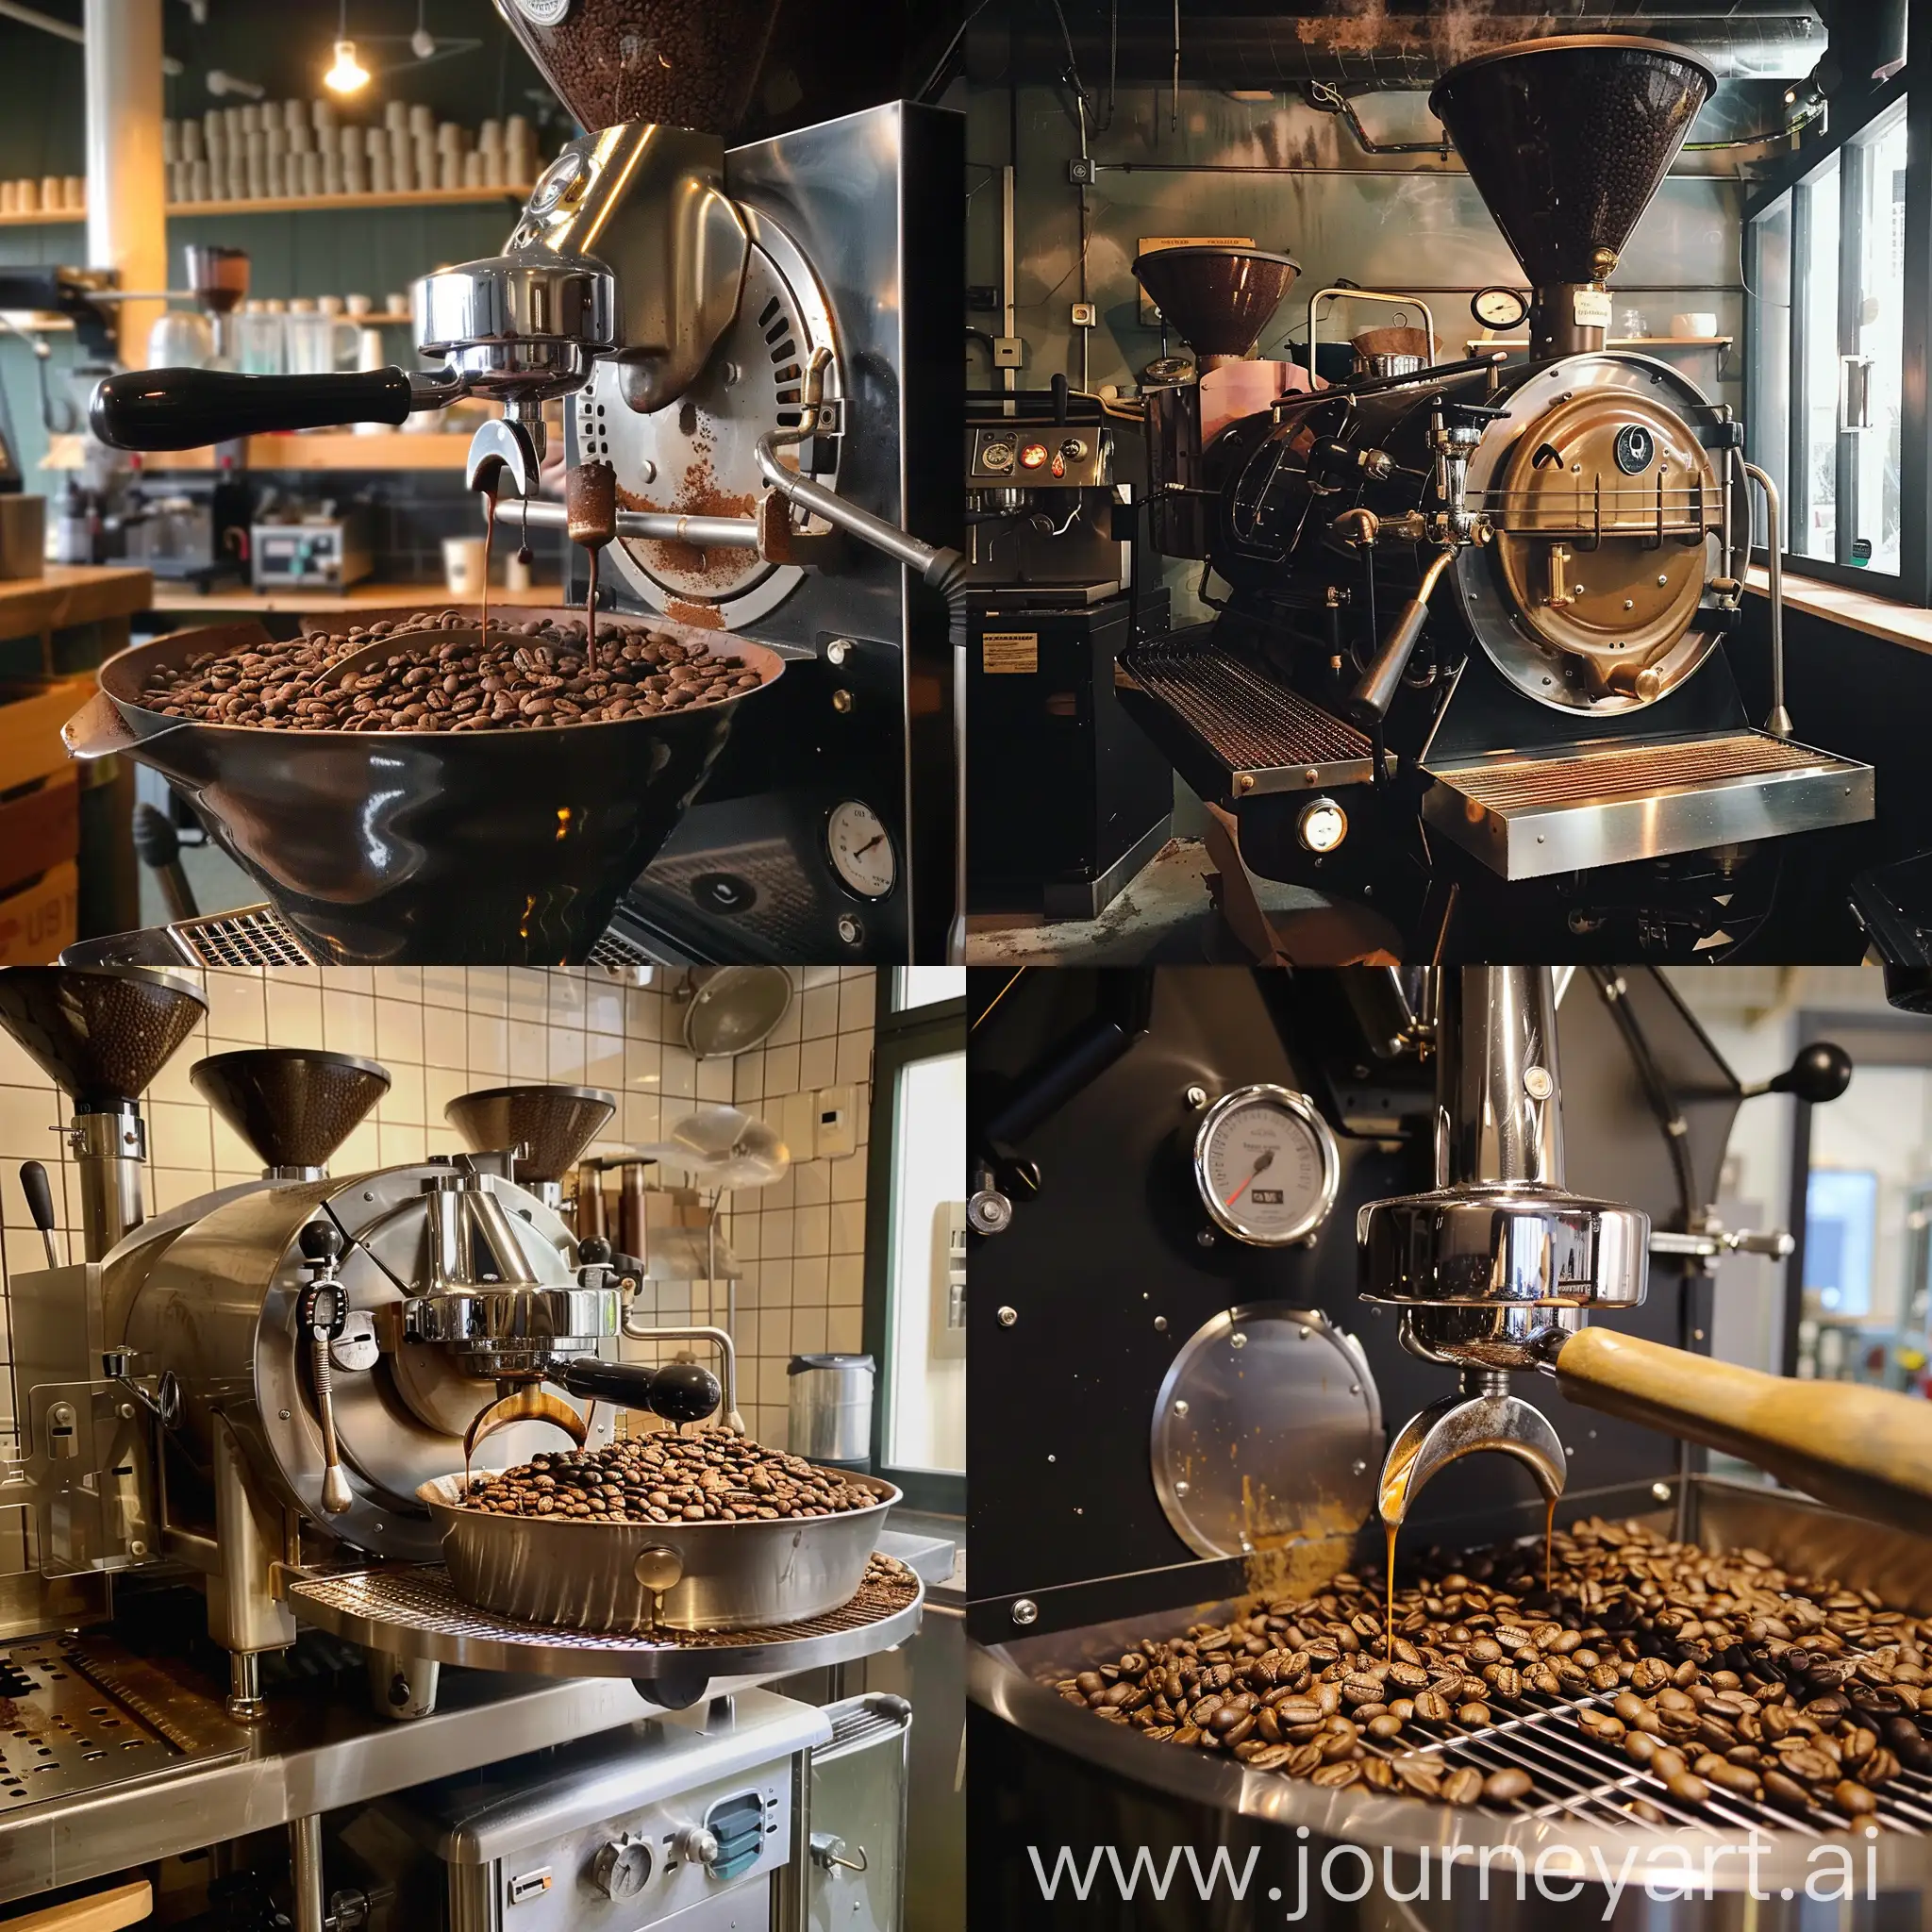 Artisan-Coffee-Roaster-at-Work-Vintage-Style-Coffee-Roasting-Process